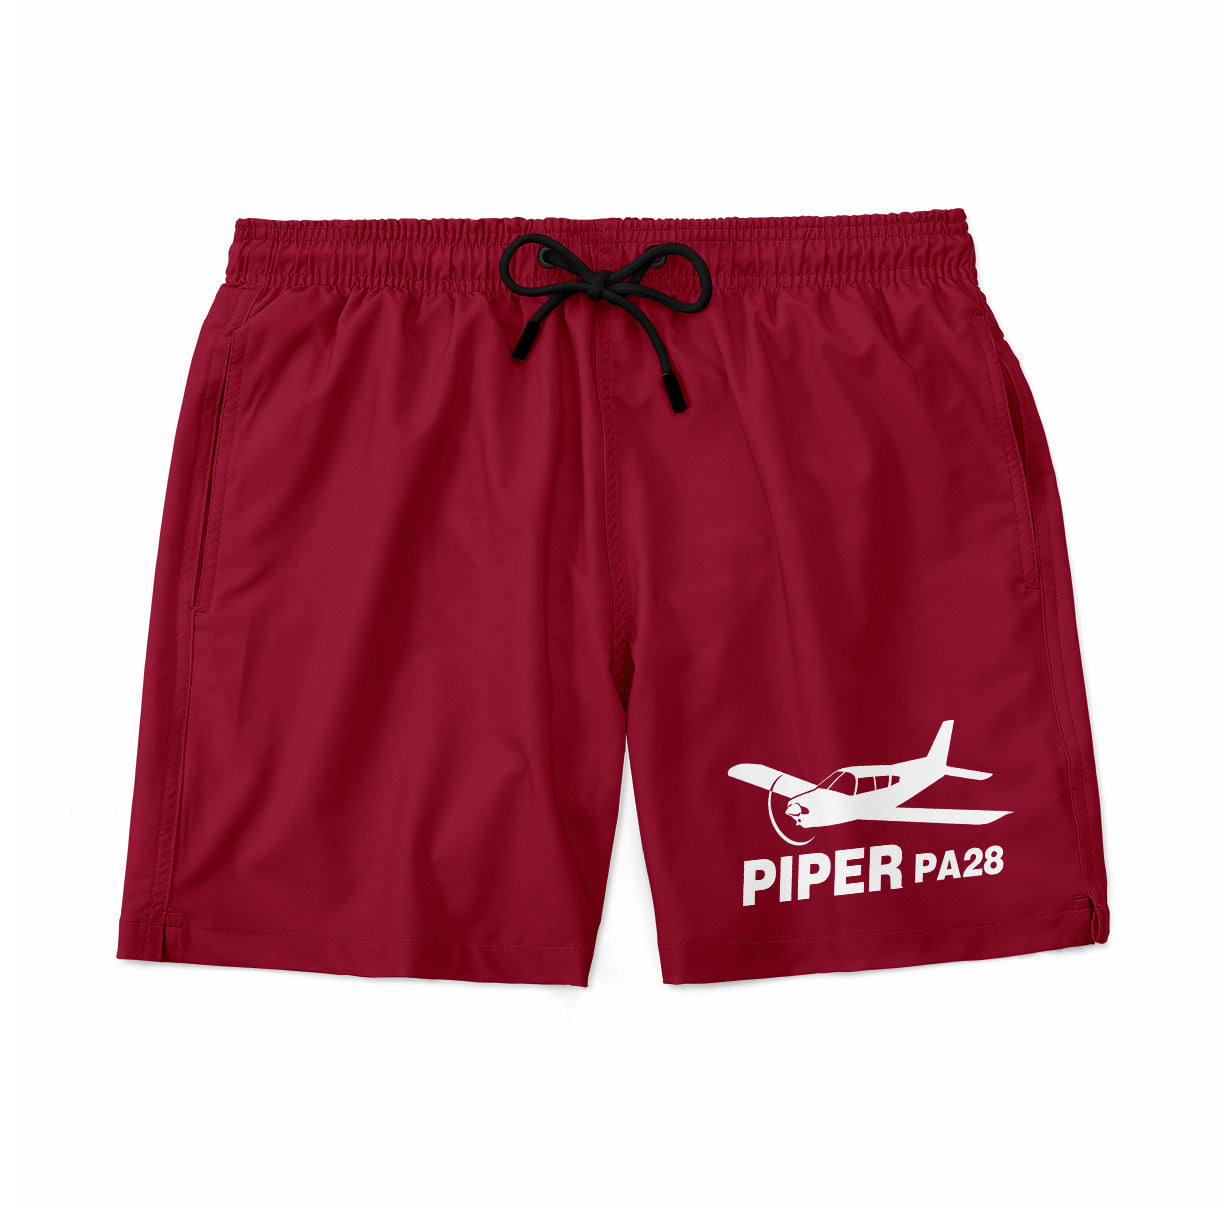 The Piper PA28 Designed Swim Trunks & Shorts